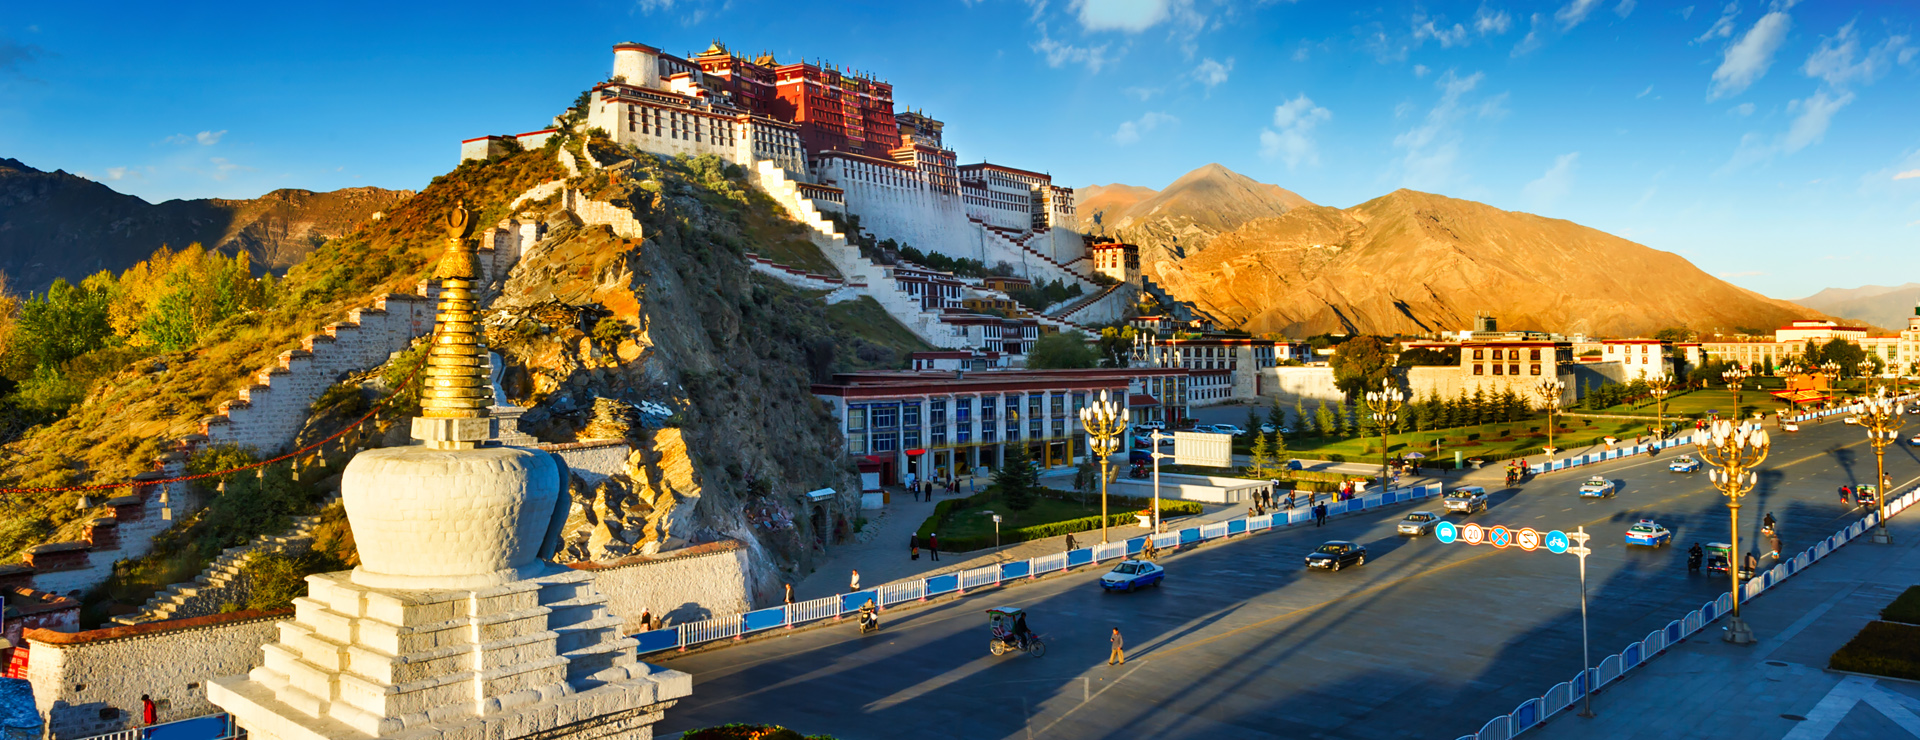 Tibet – Potalapalatset